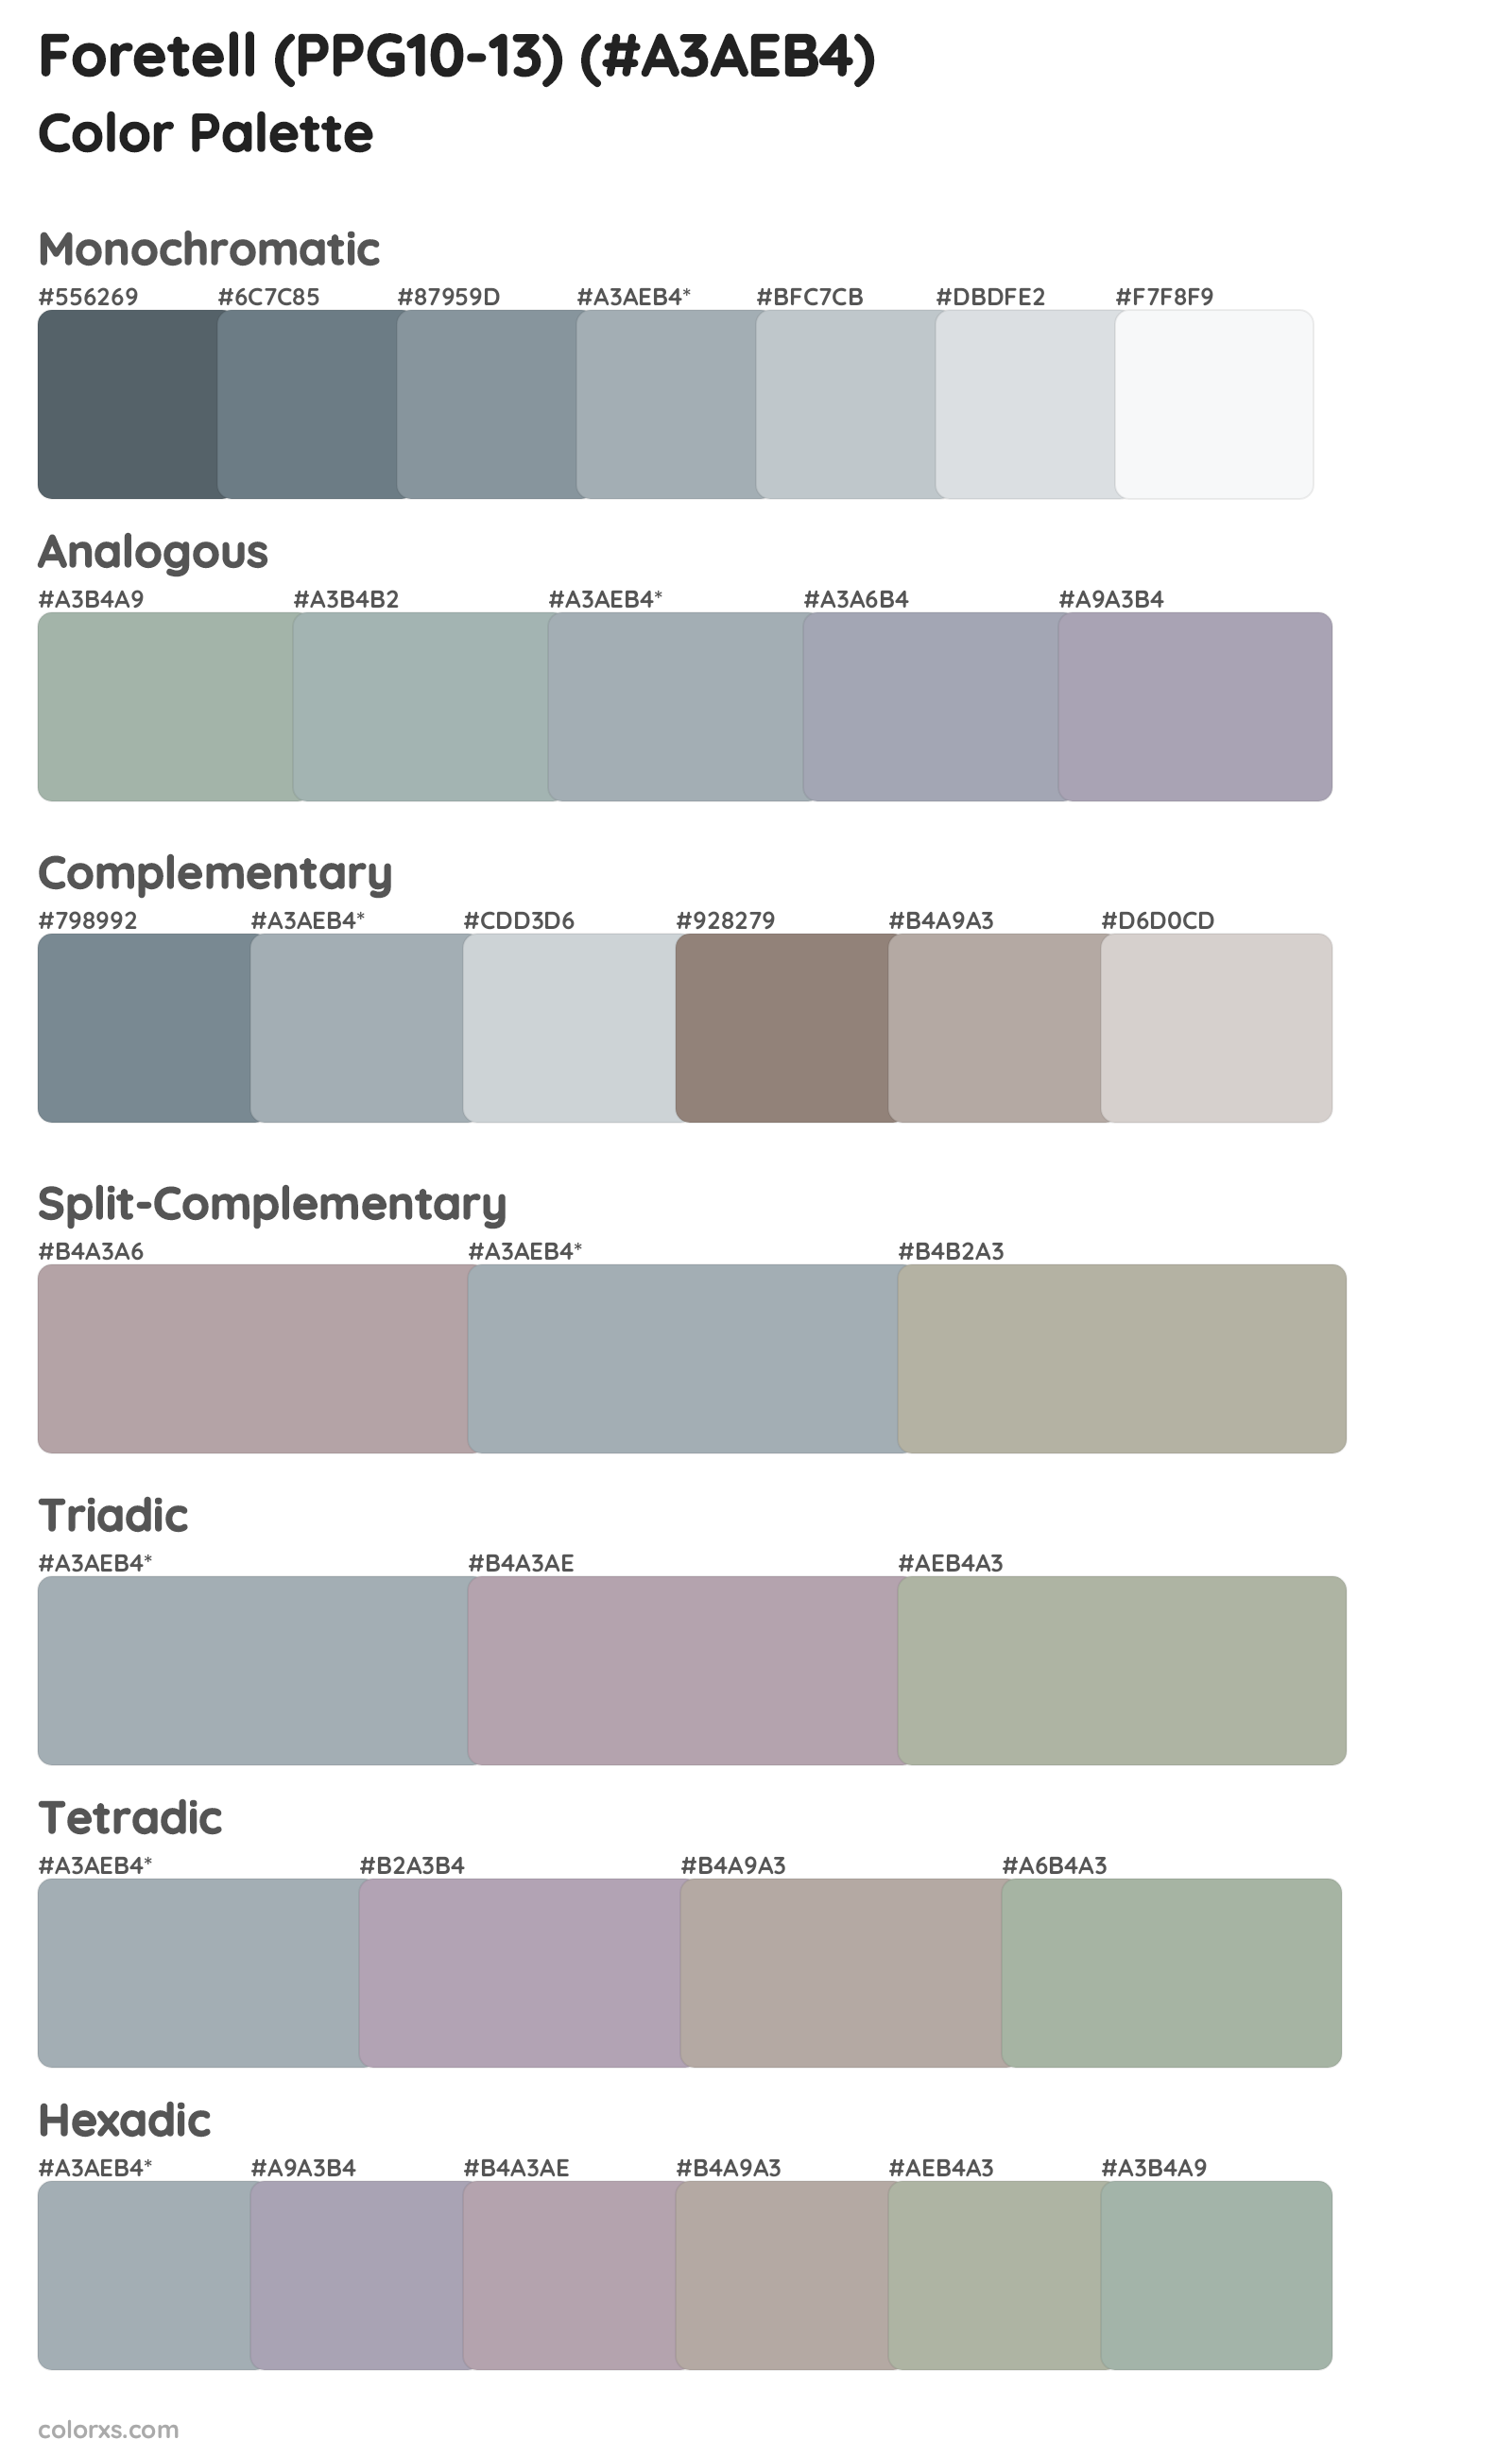 Foretell (PPG10-13) Color Scheme Palettes